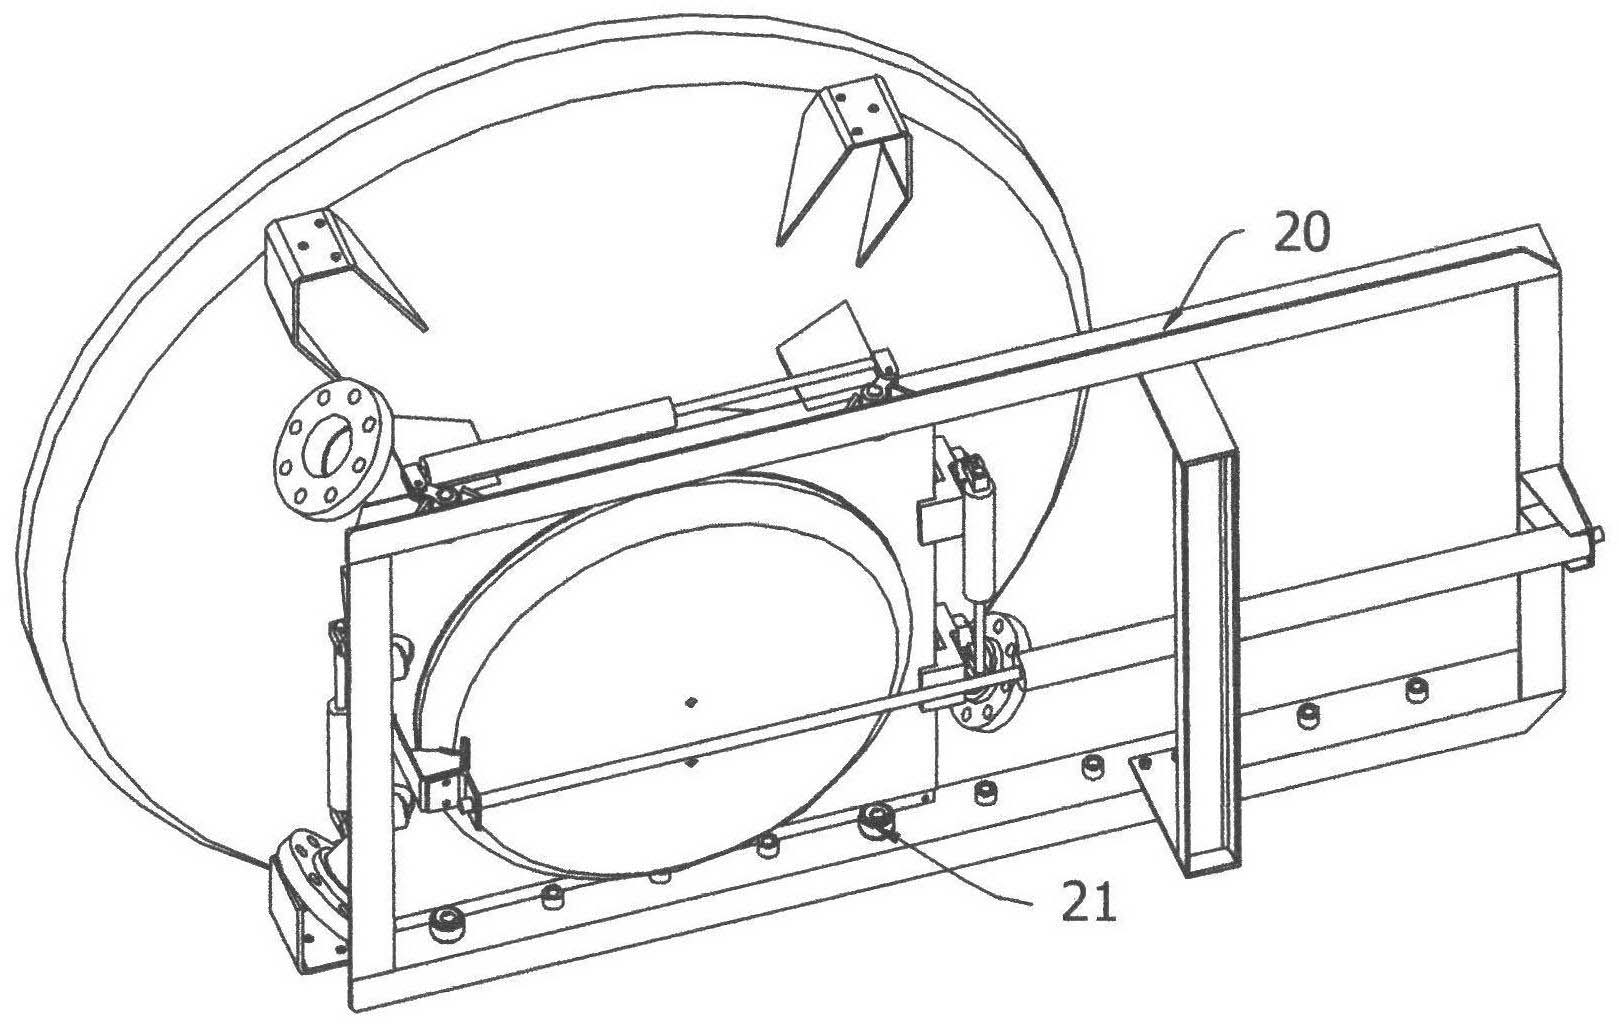 Lower cover structure of frameless sterilizing tank